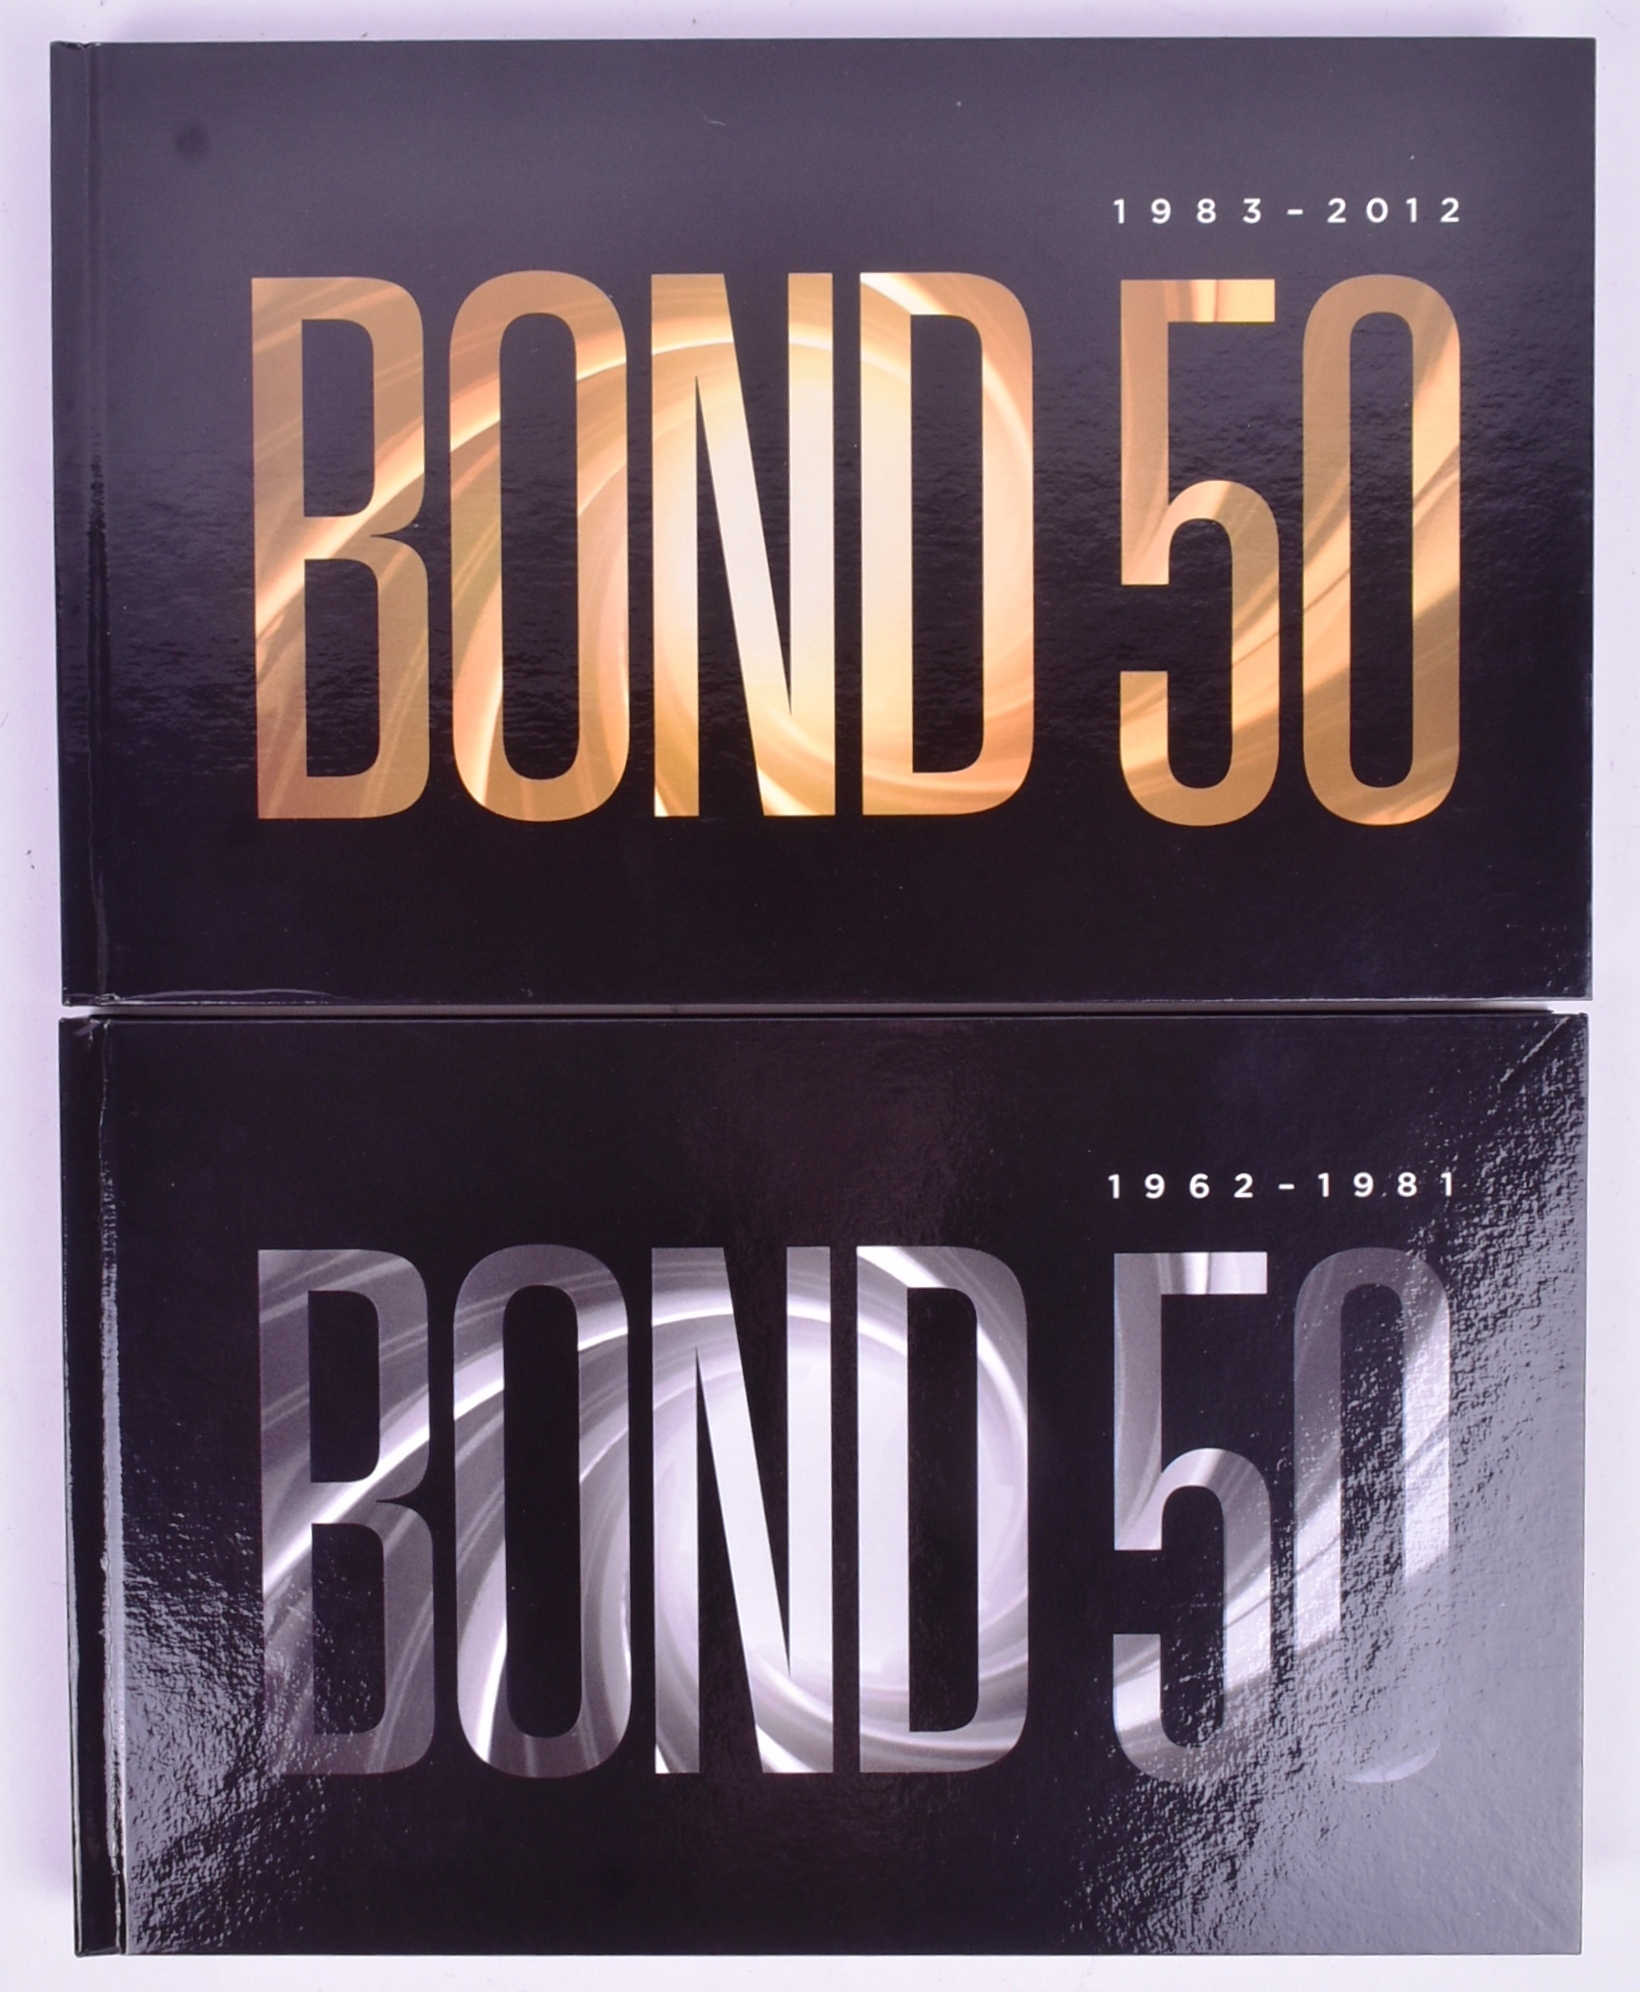 JAMES BOND 007 - ' FIVE DECADES ' BLU RAY DVD COLLECTION BOX SET - Image 4 of 5